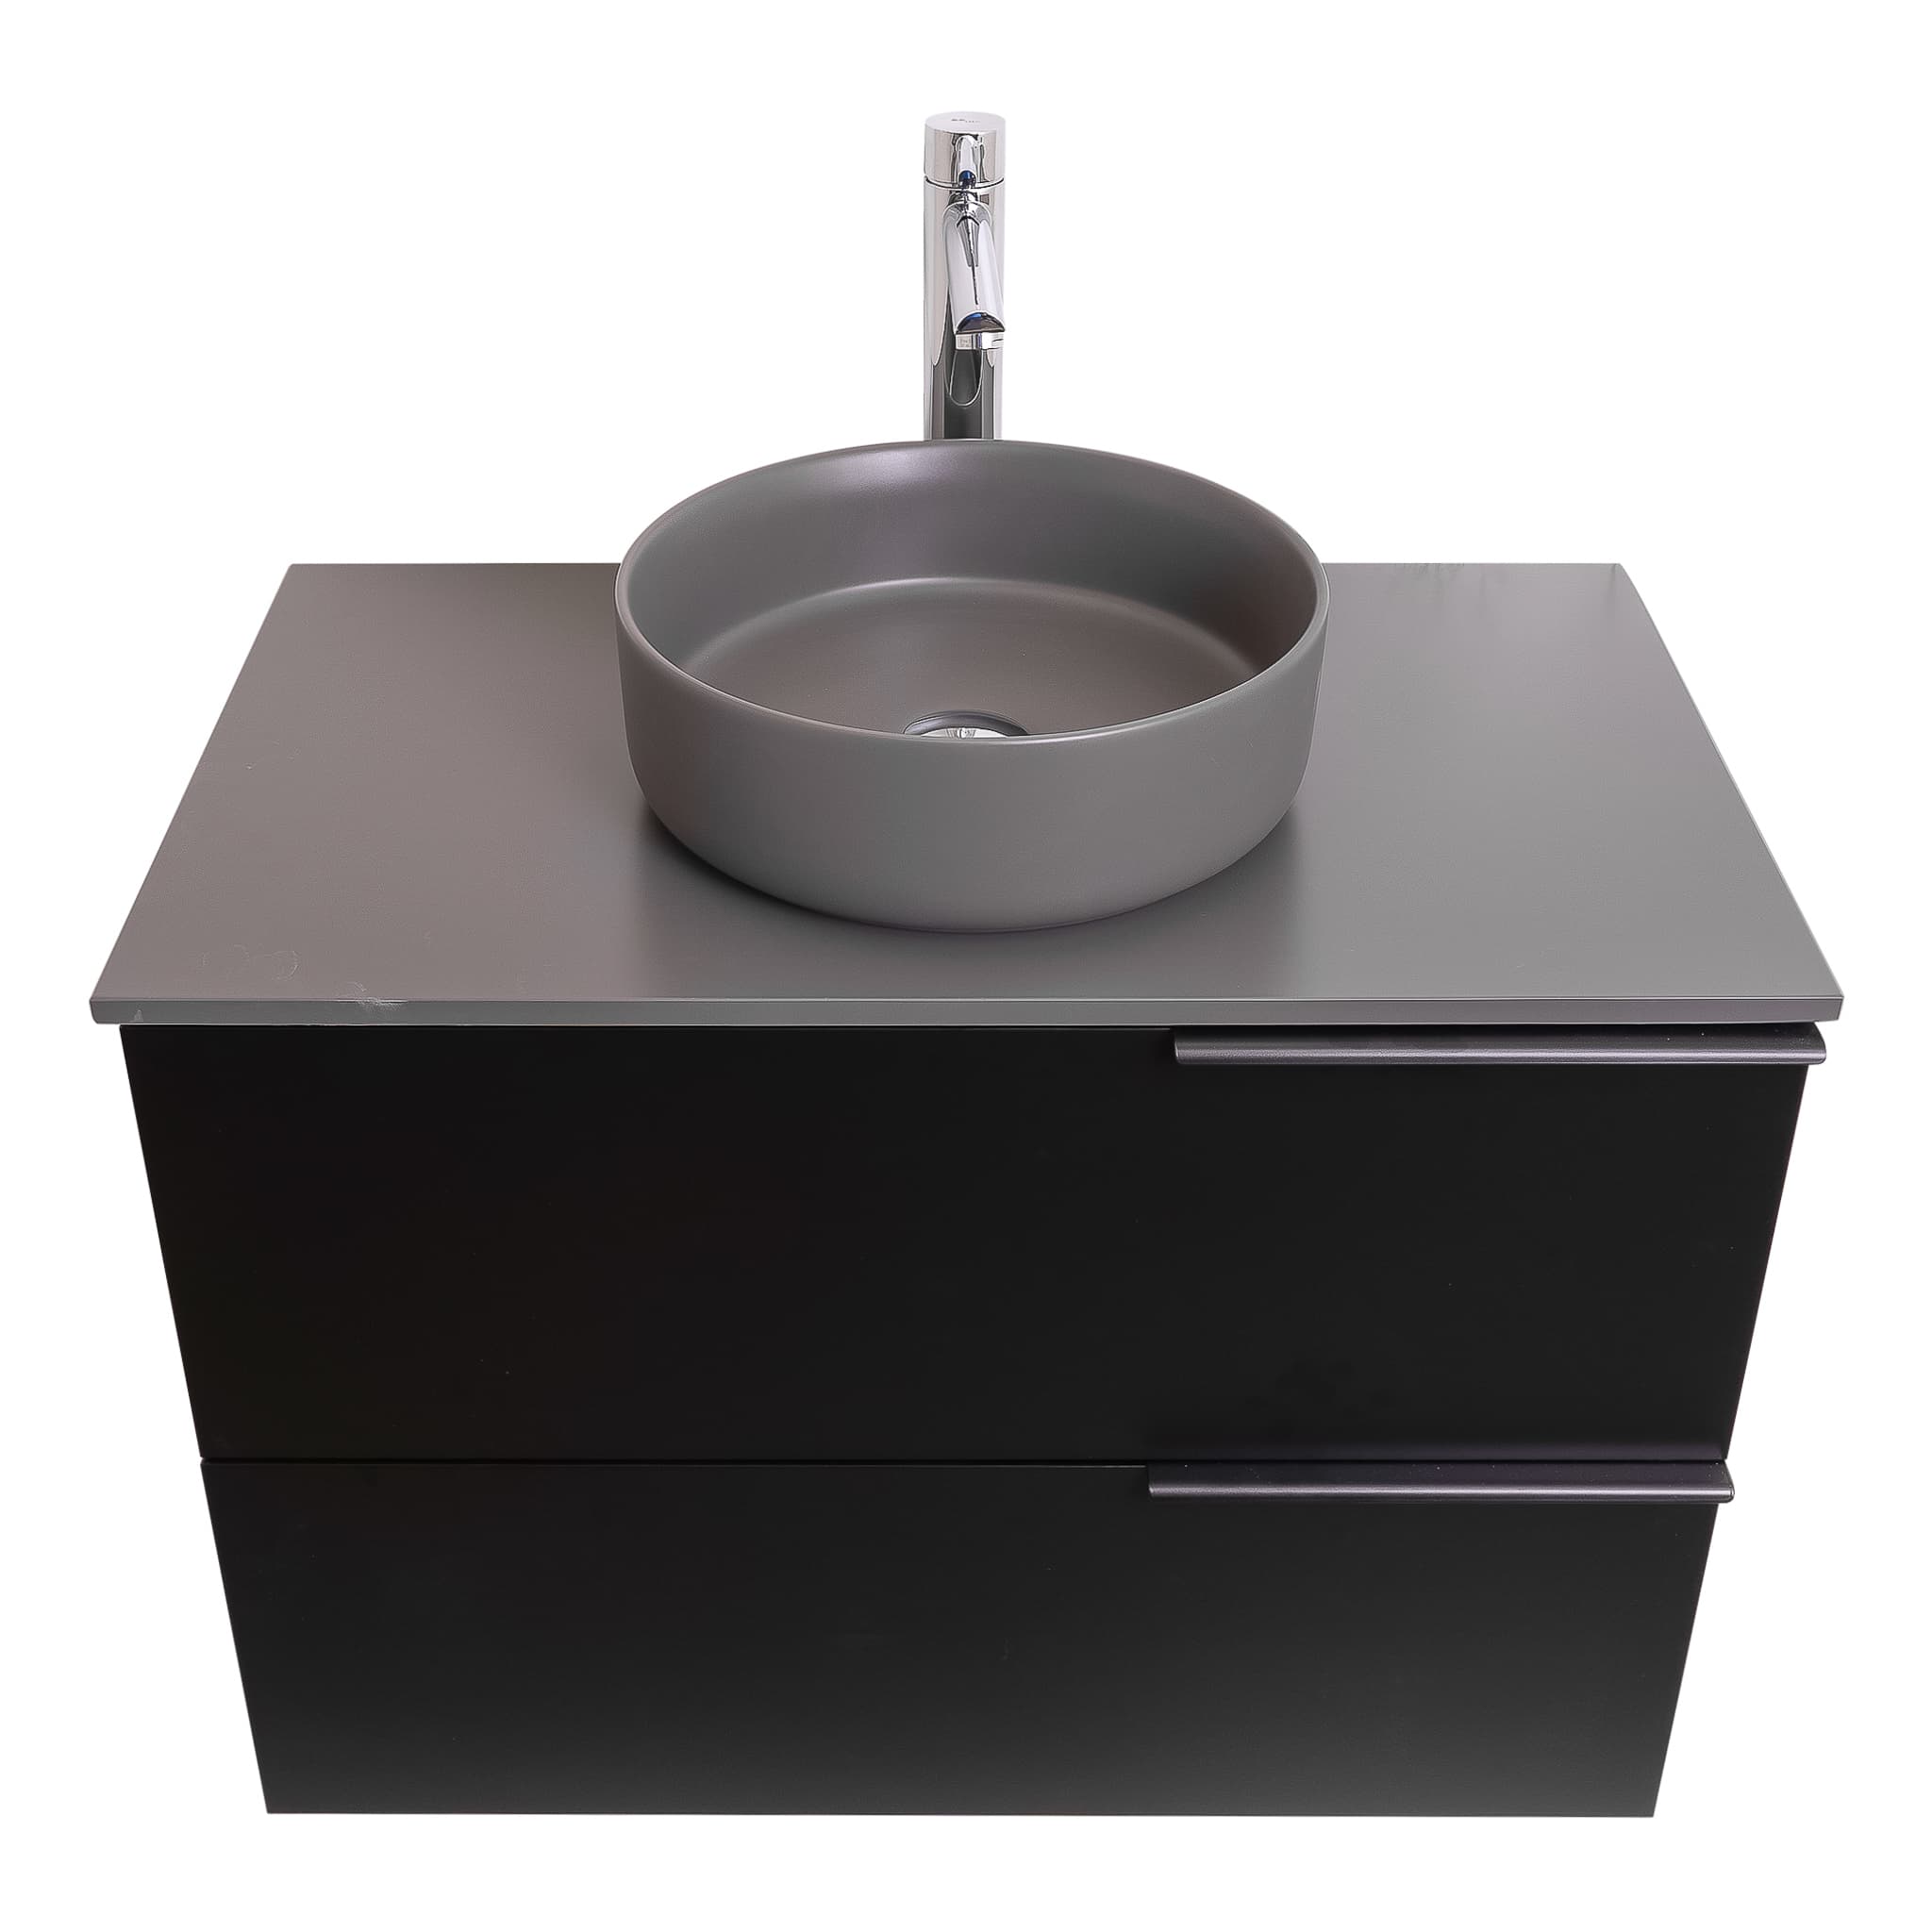 Mallorca 31.5 Matte Black Cabinet, Ares Grey Ceniza Top And Ares Grey Ceniza Ceramic Basin, Wall Mounted Modern Vanity Set